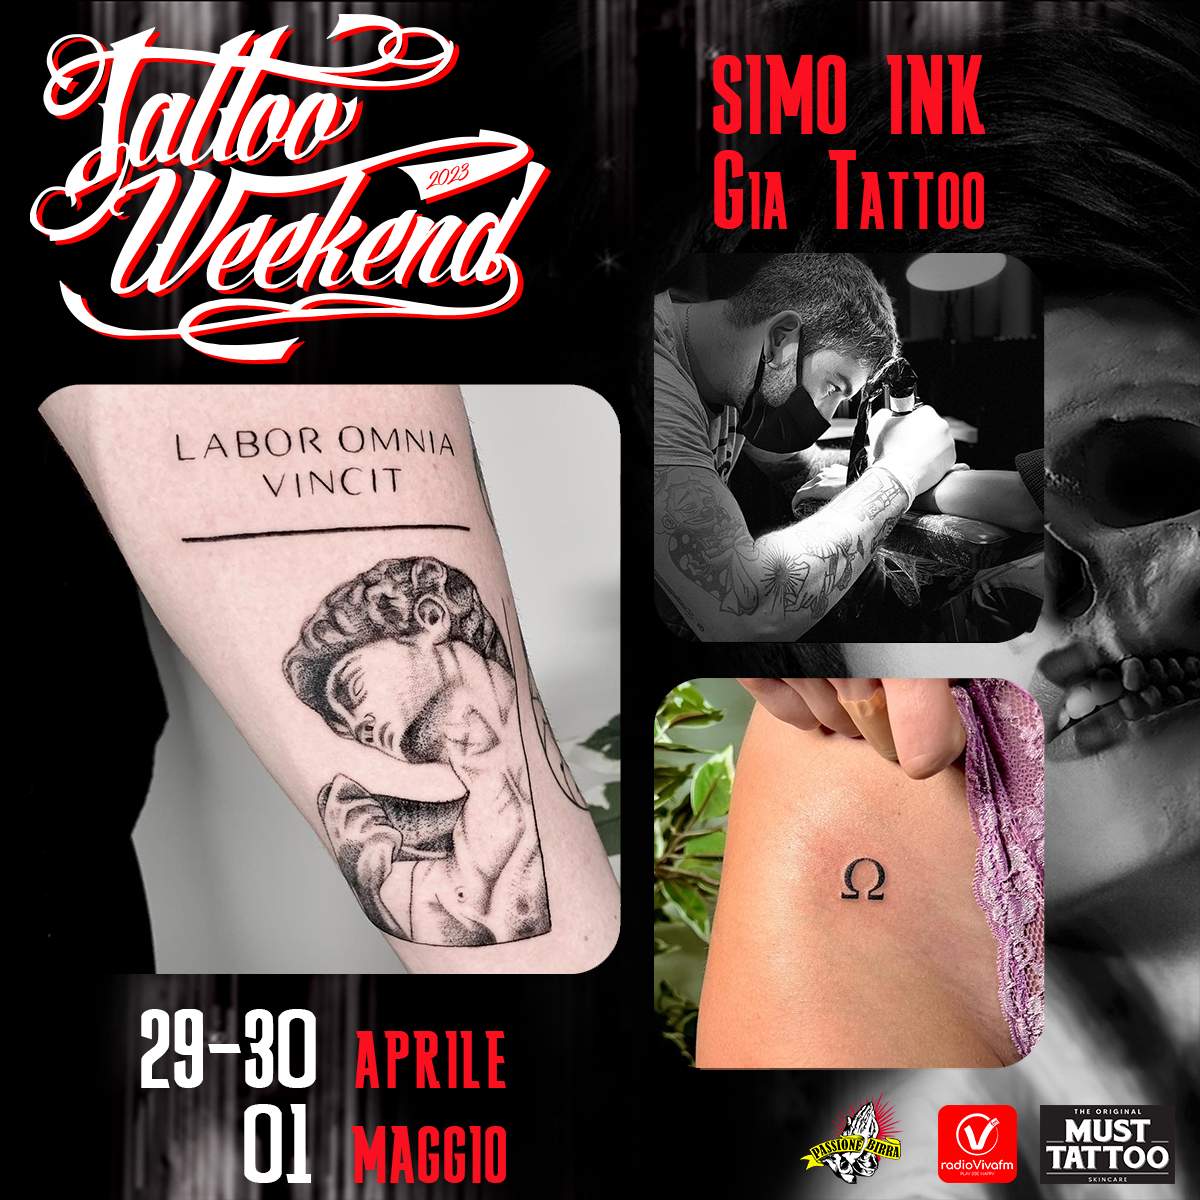 Tatuatevi con Simo Ink allo stand Gia Tattoo